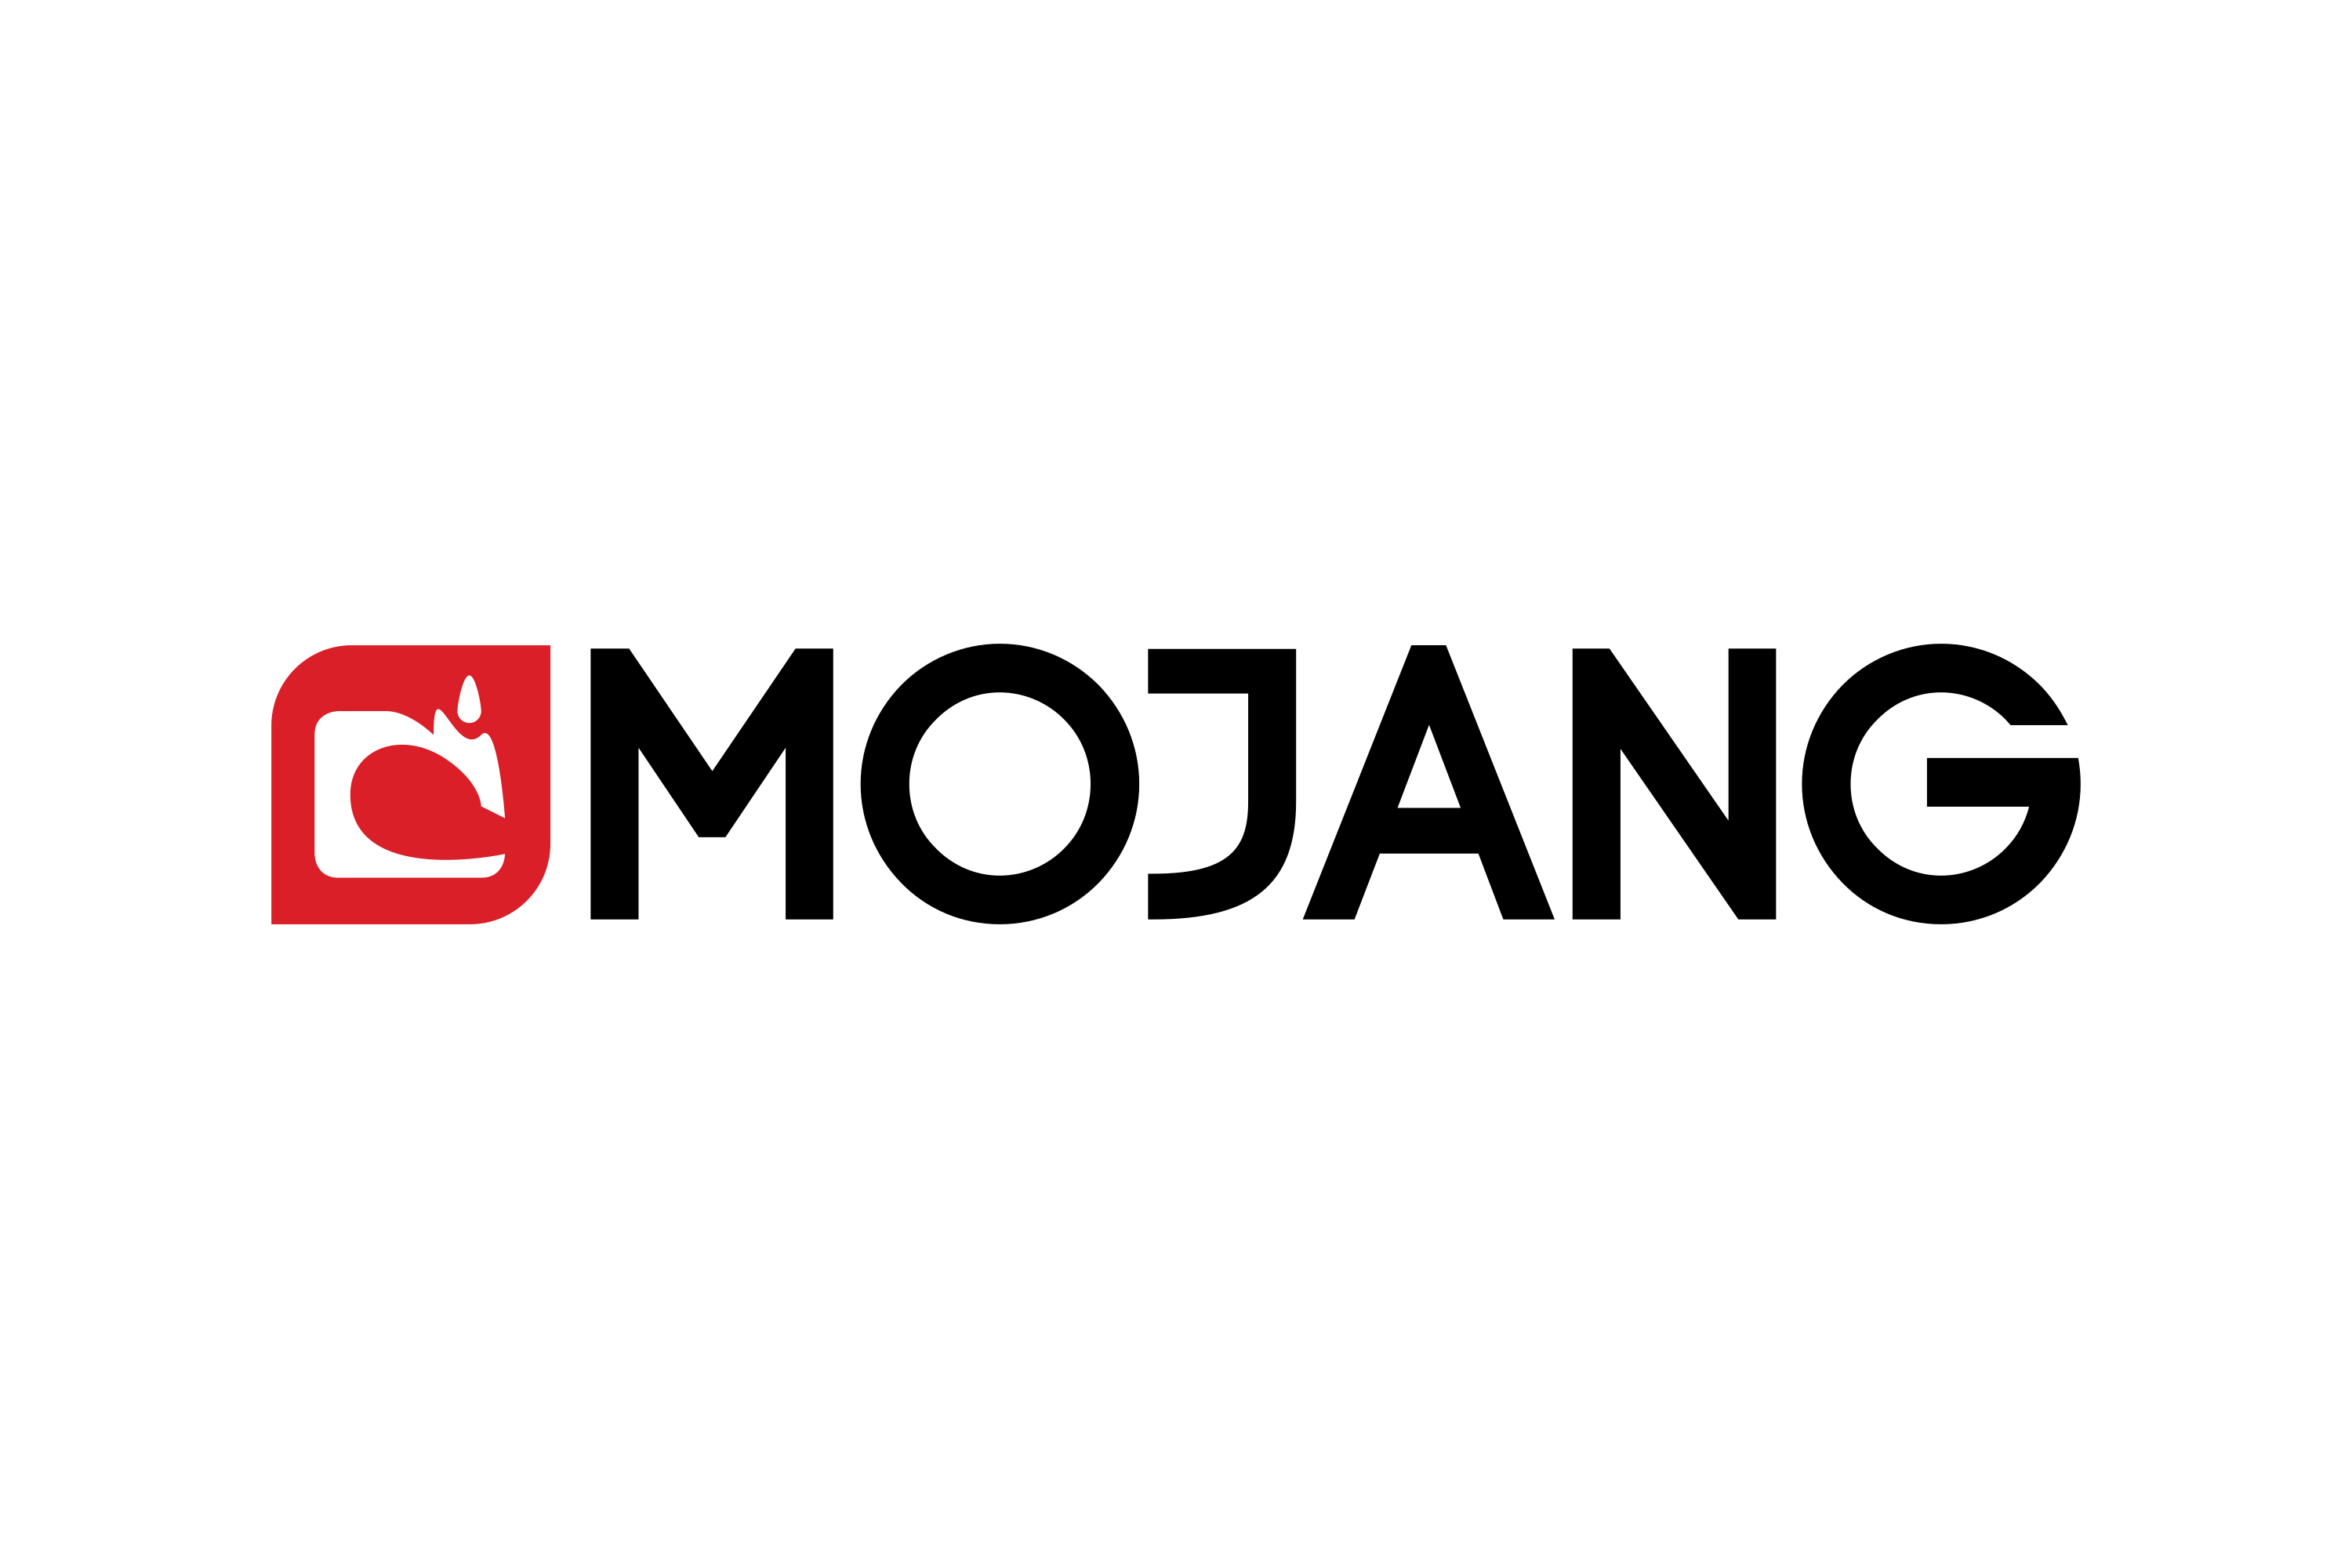 Download Mojang Logo in SVG Vector or PNG File Format - Logo.wine